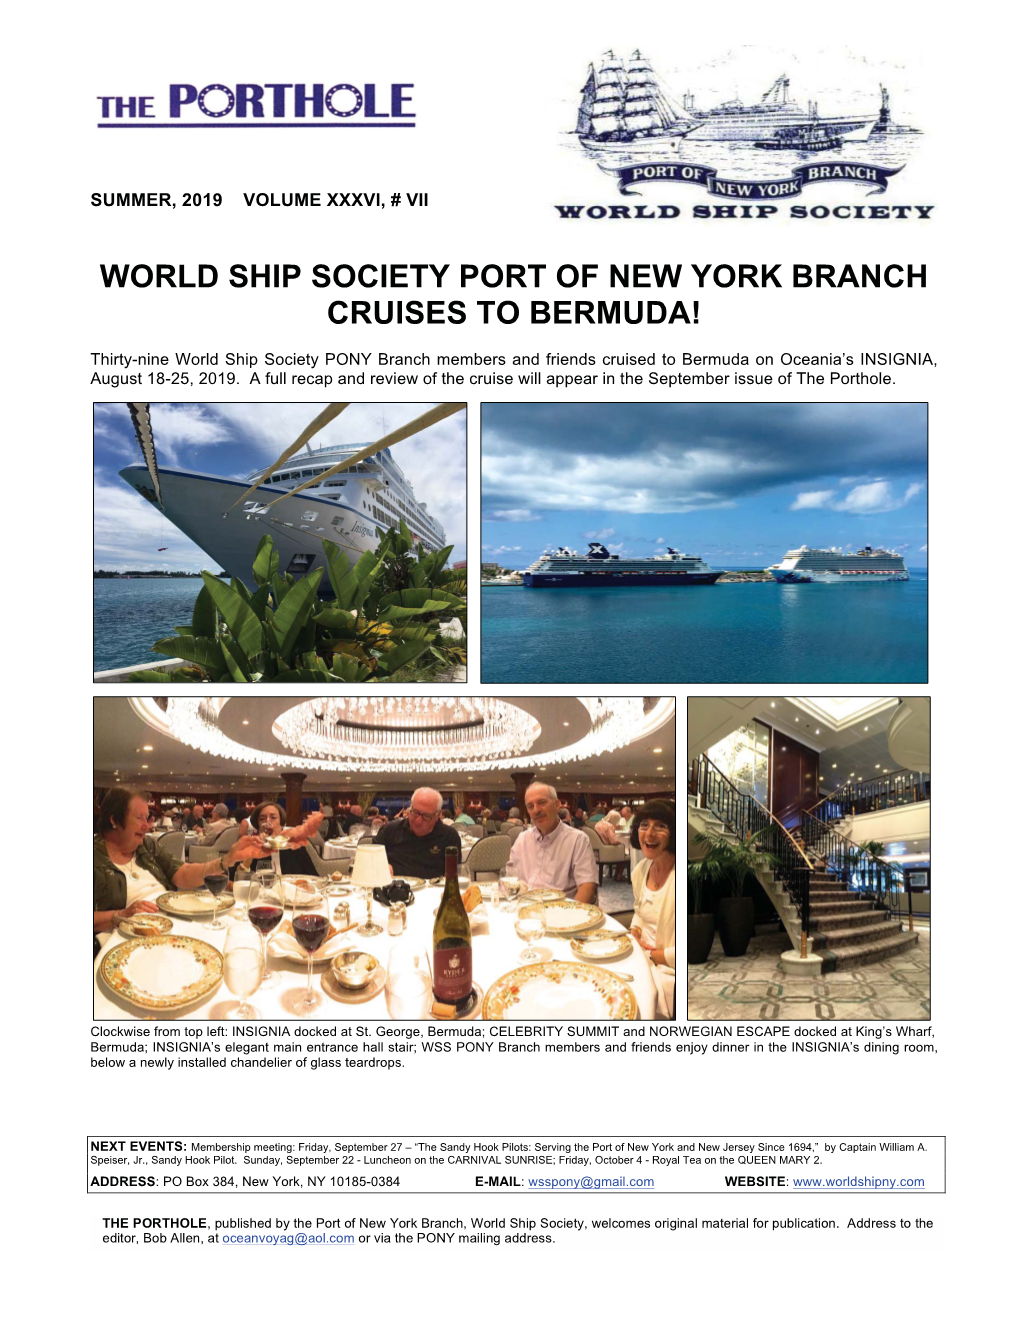 World Ship Society Port of New York Branch Cruises to Bermuda!